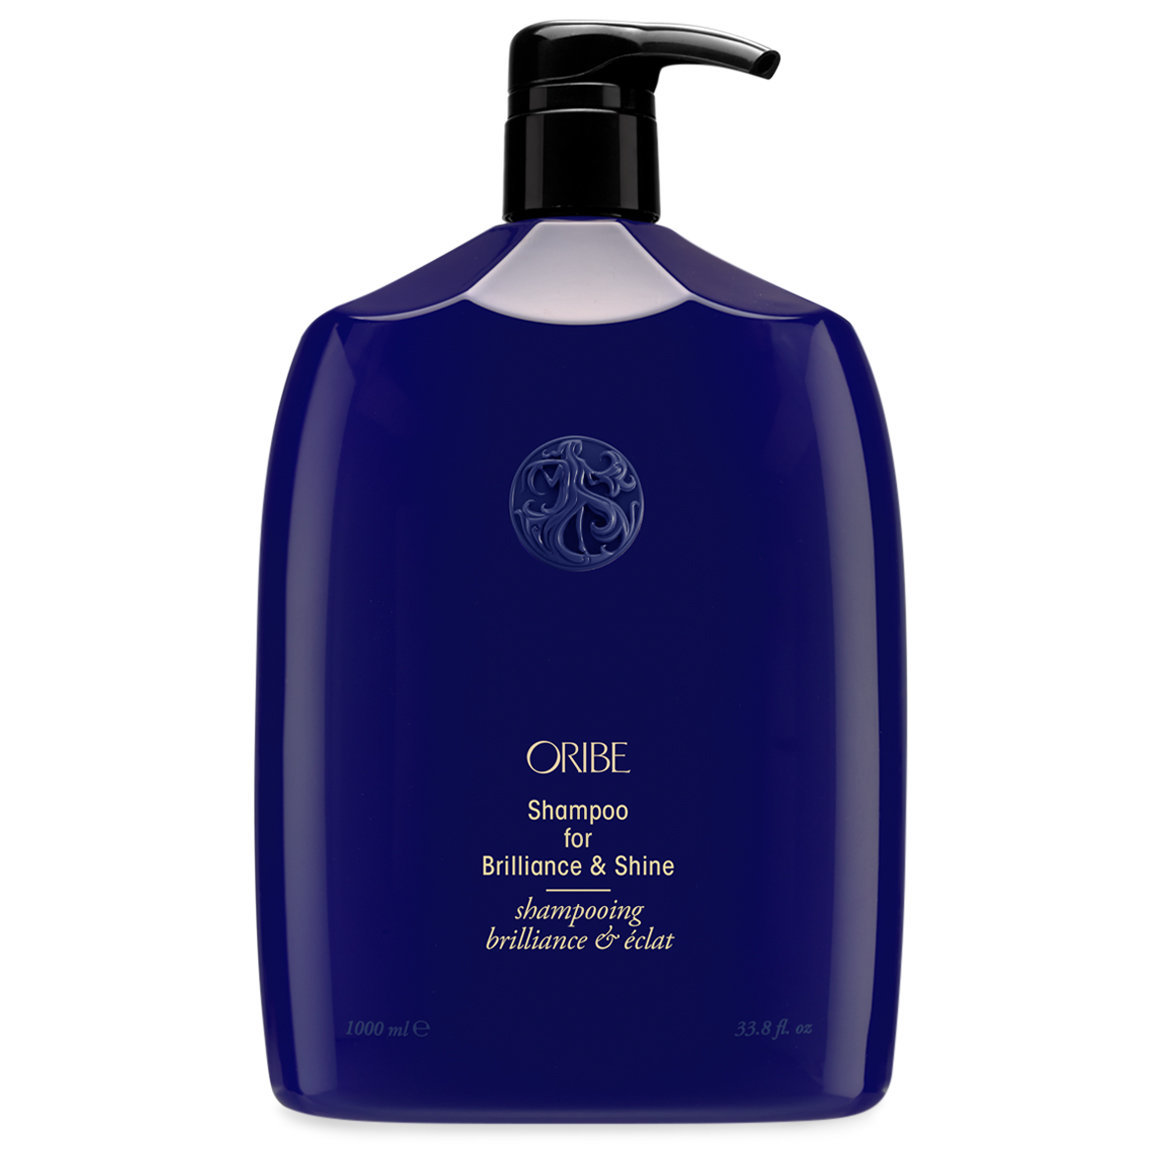 Oribe Shampoo for Brilliance & Shine 1 L alternative view 1 - product swatch.